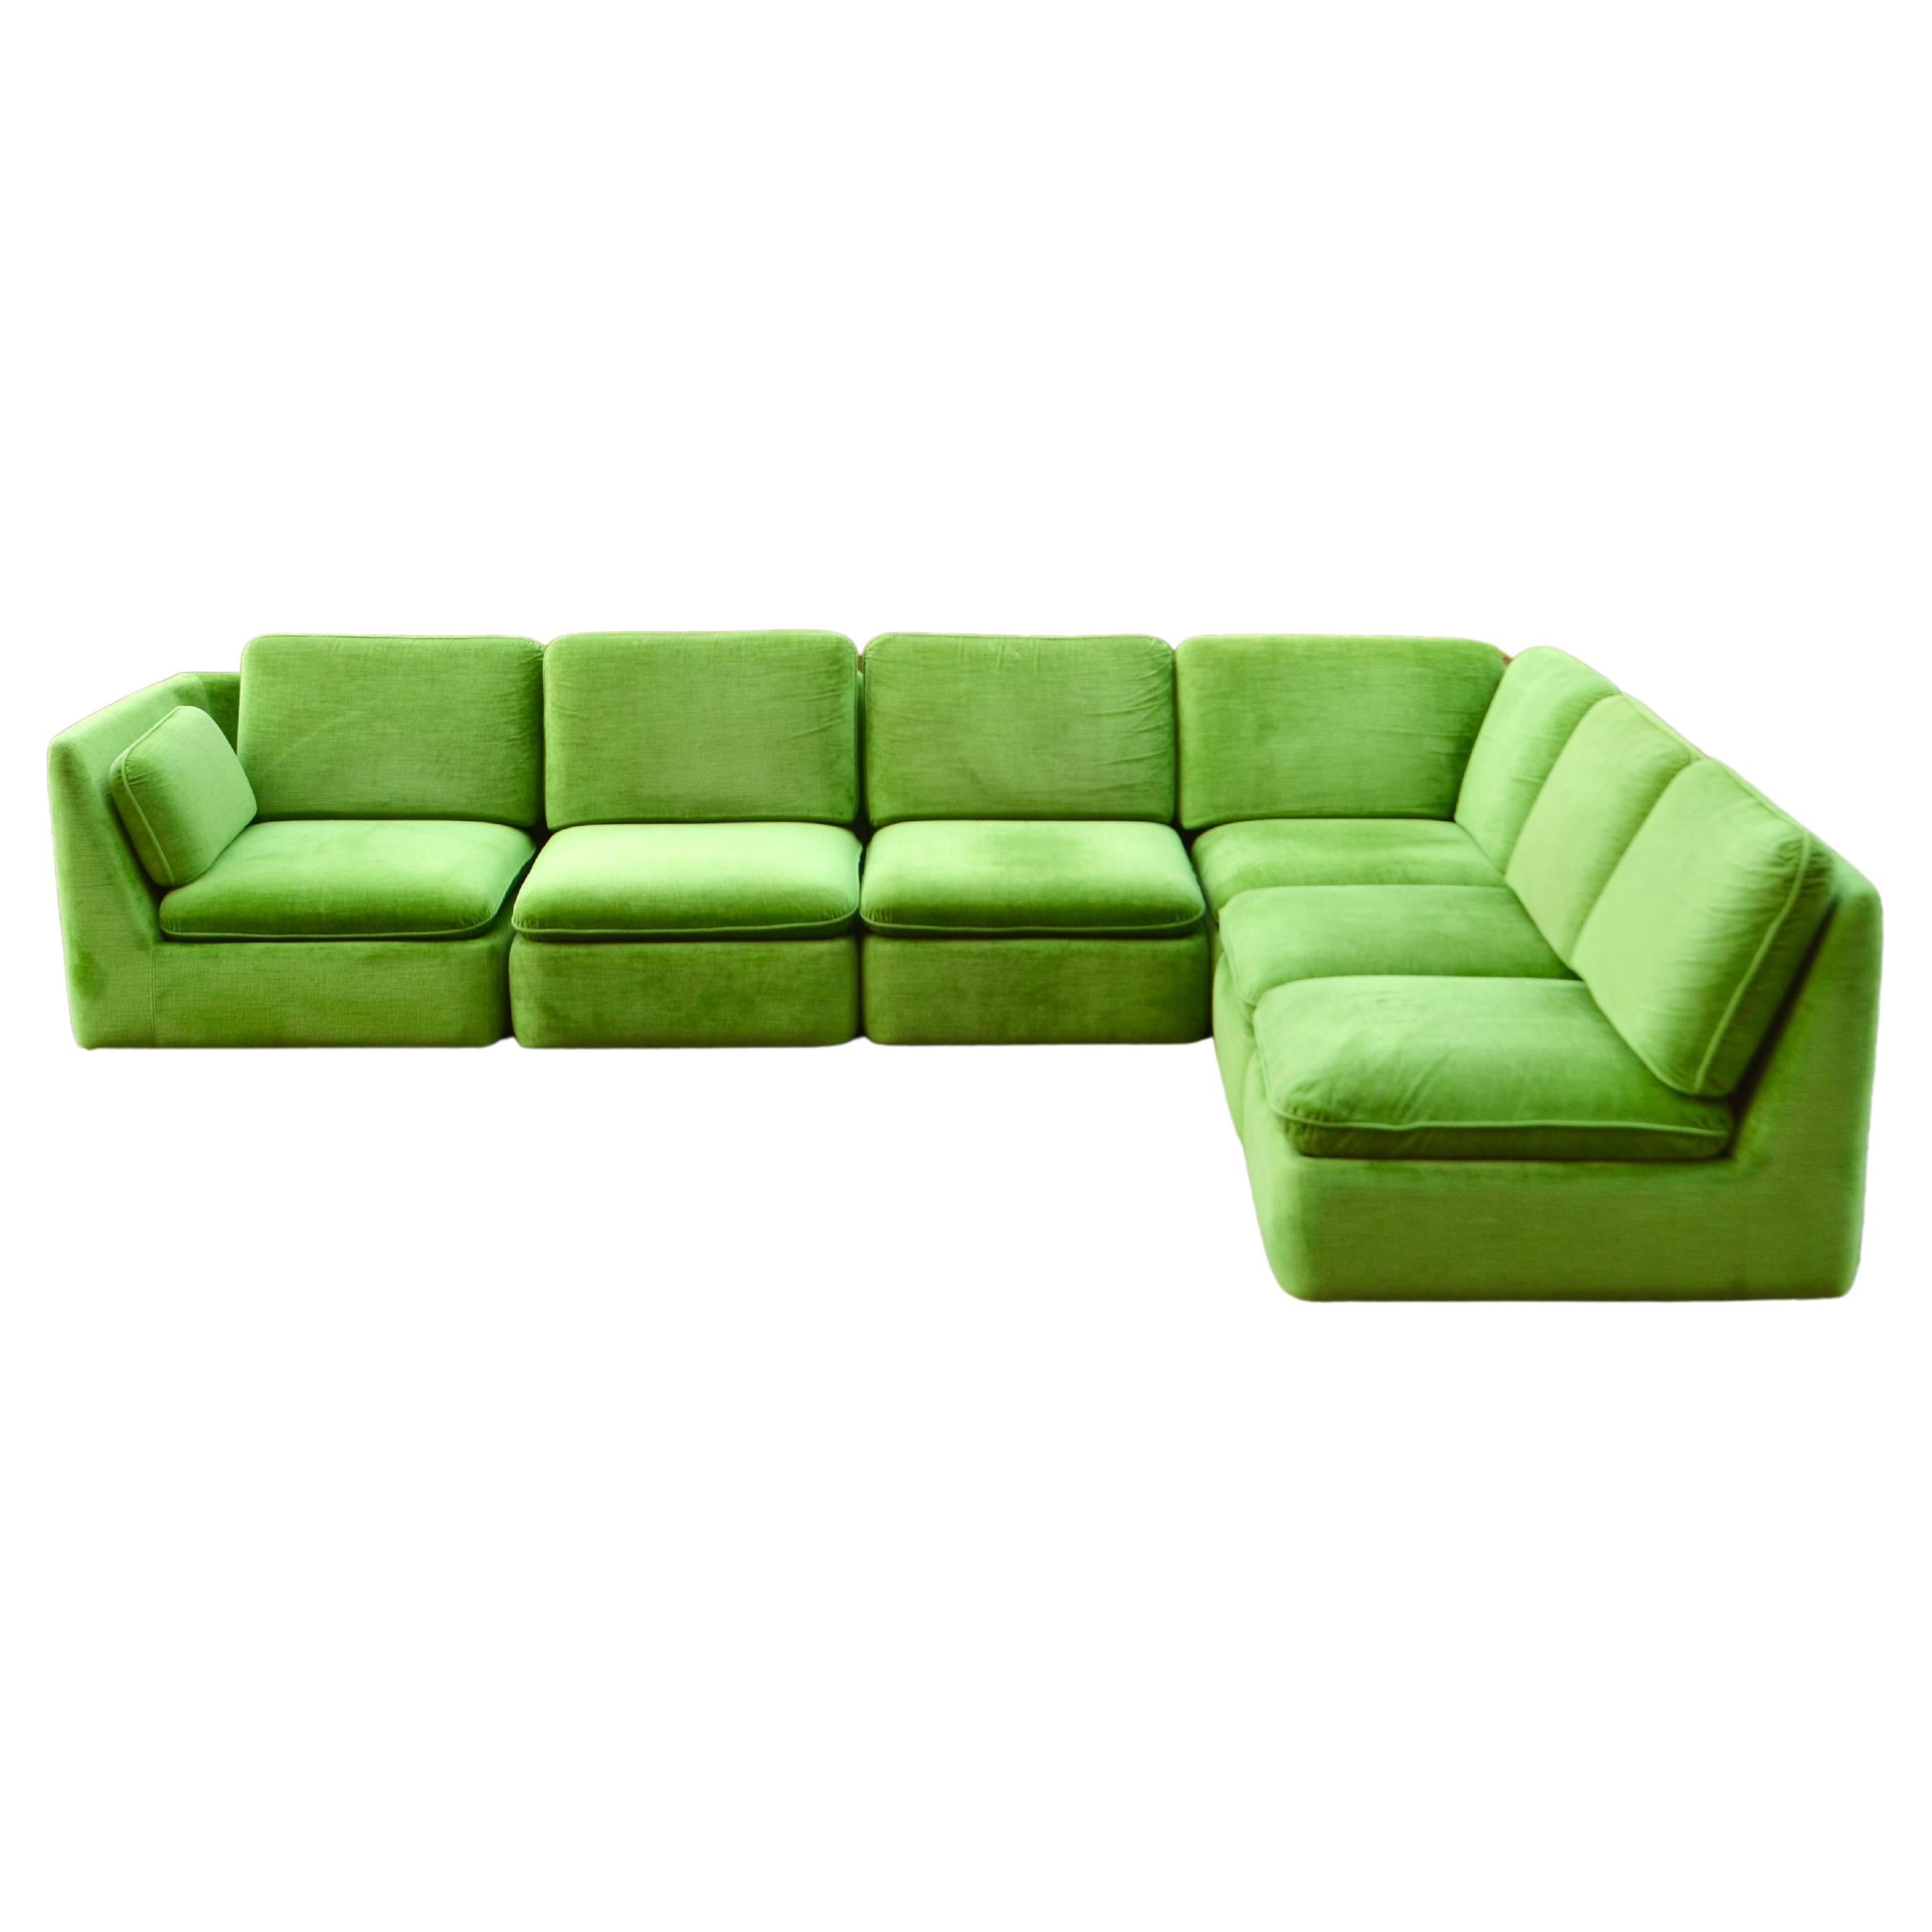 LÜBKE & ROLF Vintage Modular limegreen Living Room Suite Sectional Sofa Germany